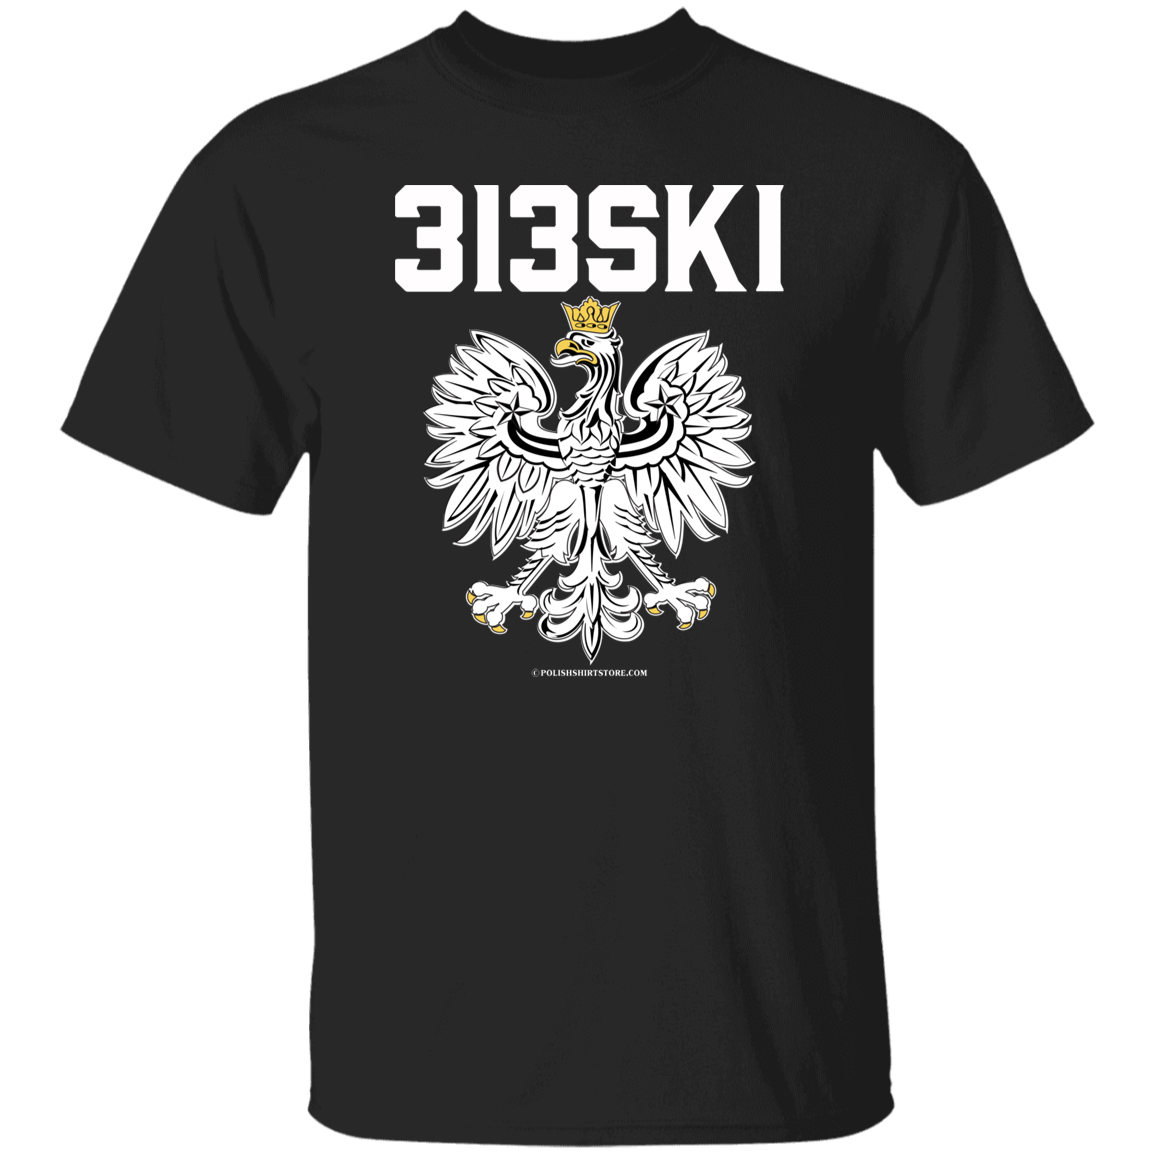 313SKI Apparel CustomCat G500 5.3 oz. T-Shirt Black S